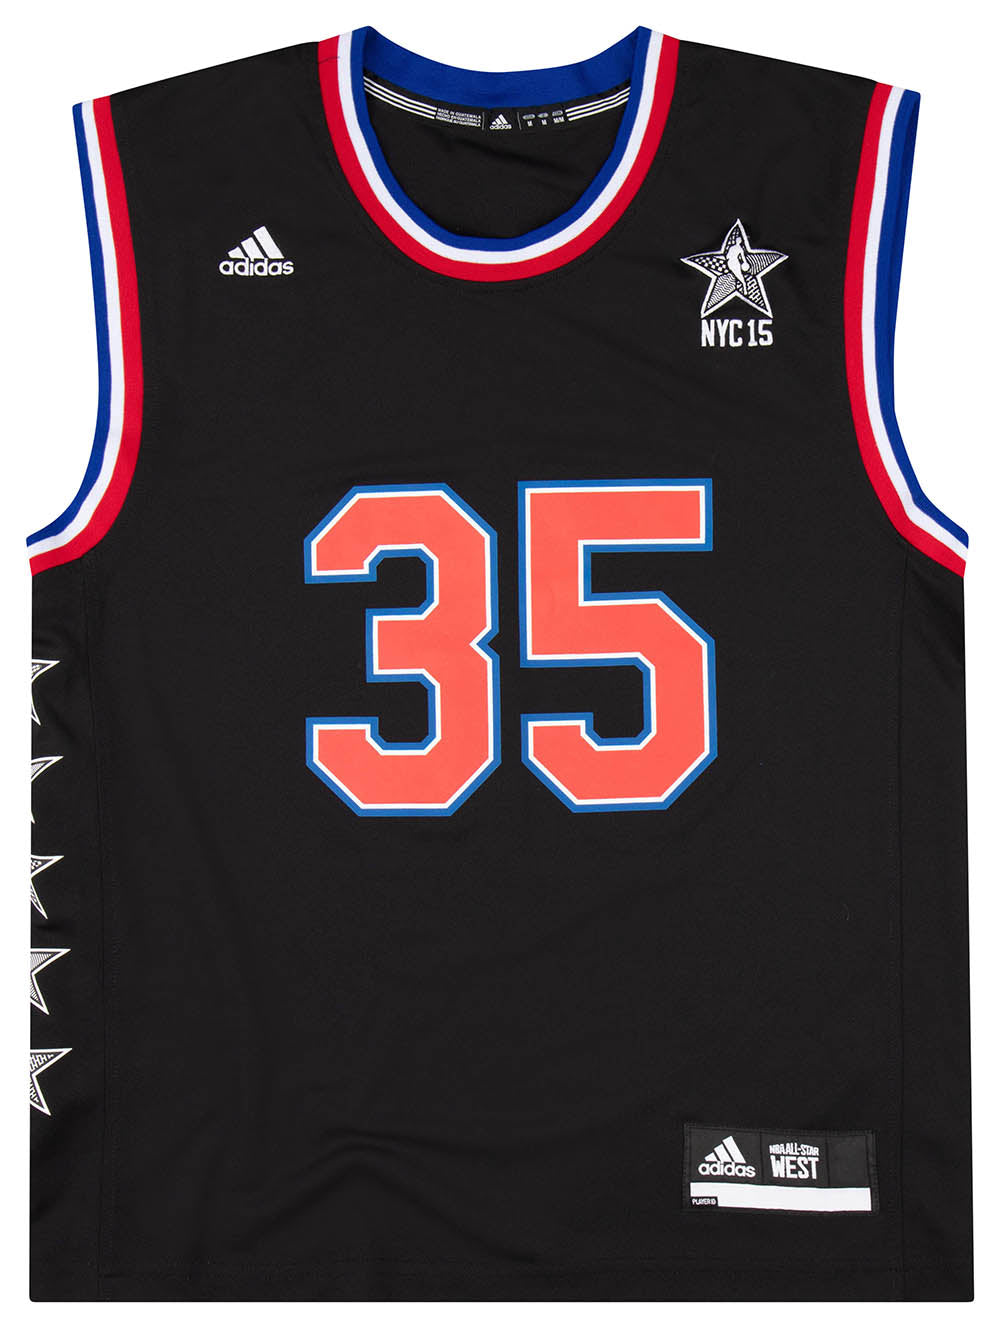 2015 NBA ALL-STAR DURANT #35 ADIDAS JERSEY M - Classic American Sports